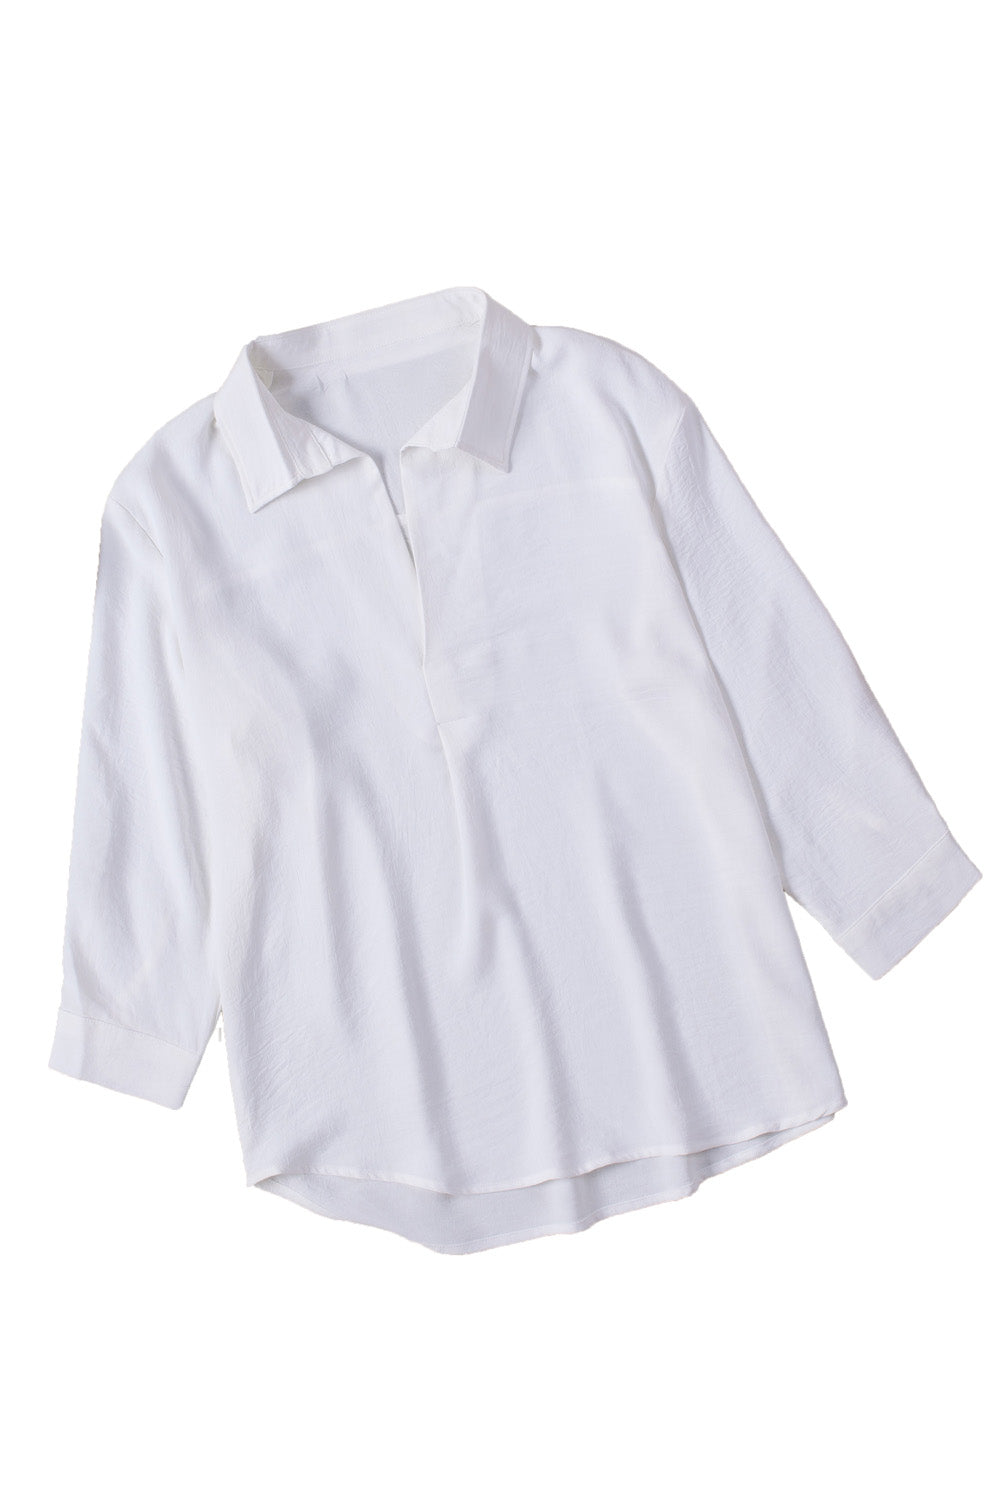 White Collared 3/4 Sleeve Shirt